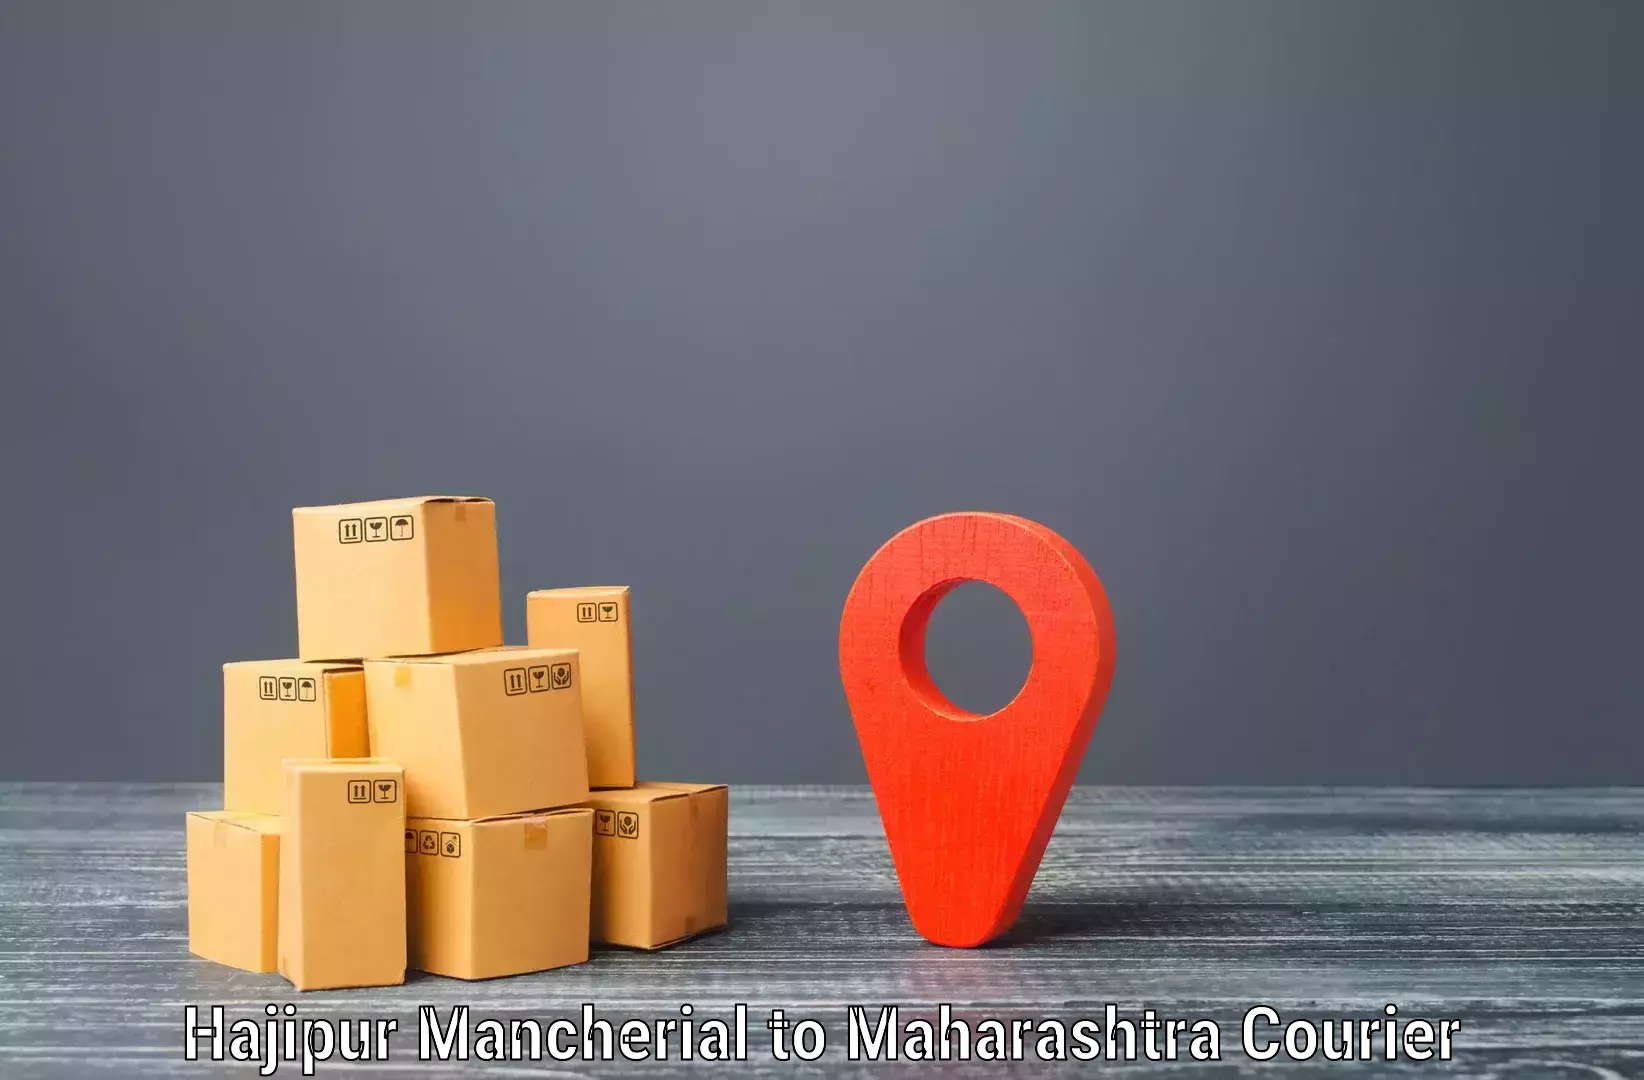 Customer-focused courier Hajipur Mancherial to Ojhar